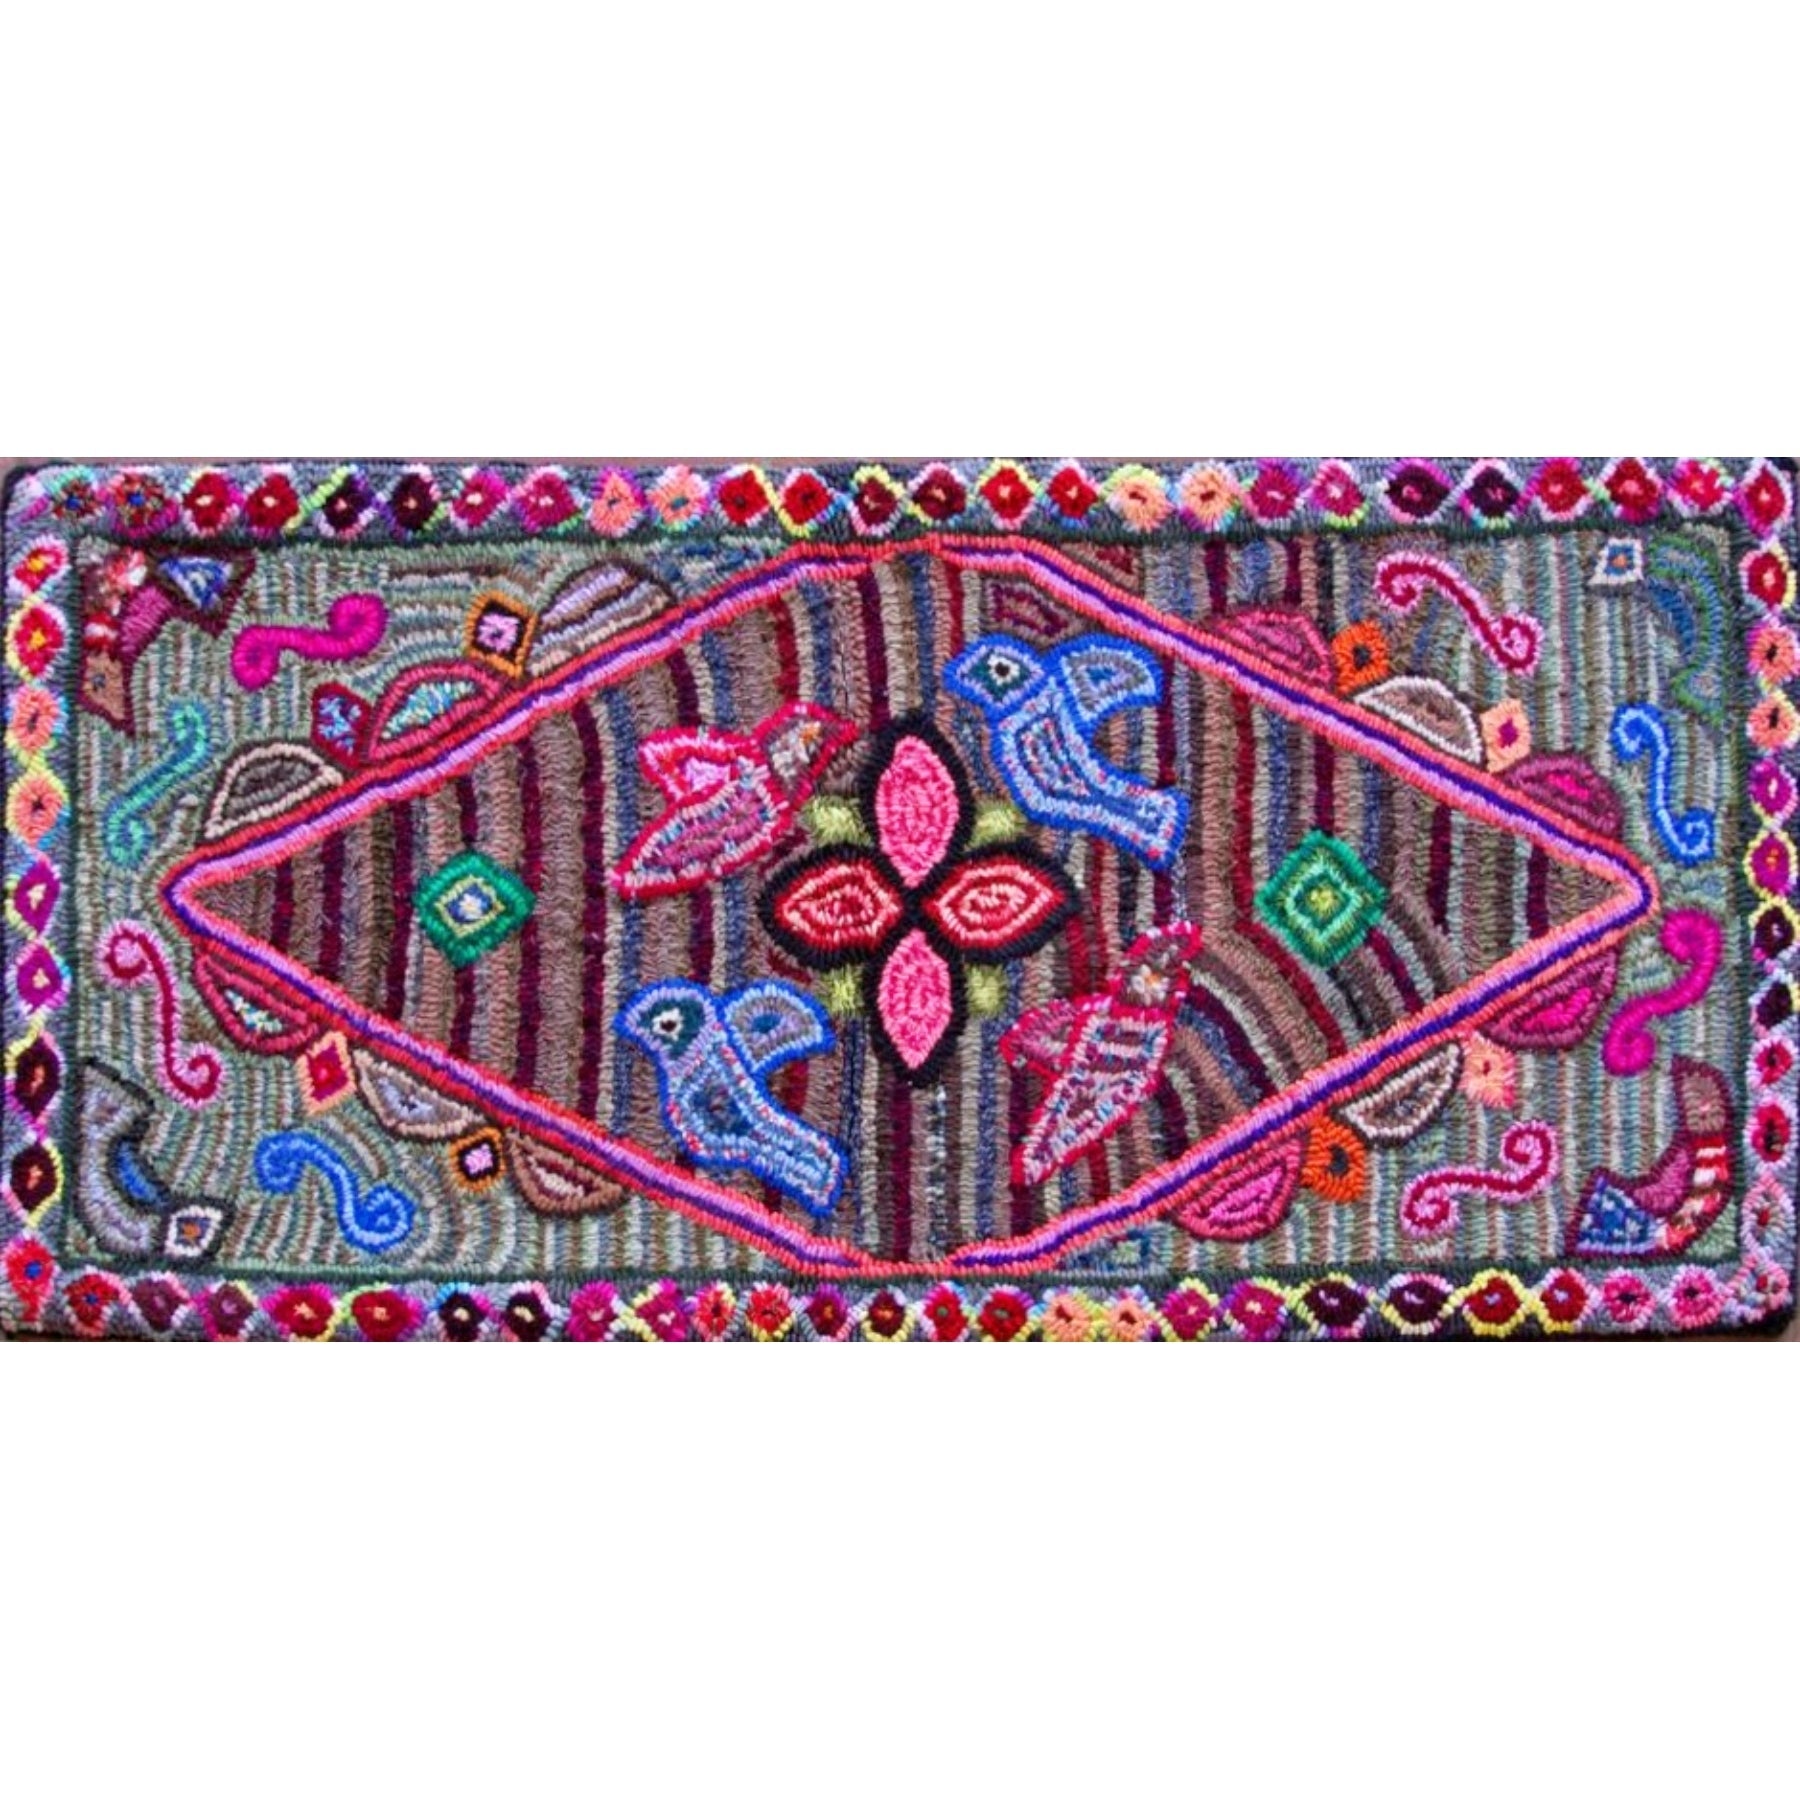 Multicolores Pattern #5, rug hooked by Rosario Gutierrez Pacheco